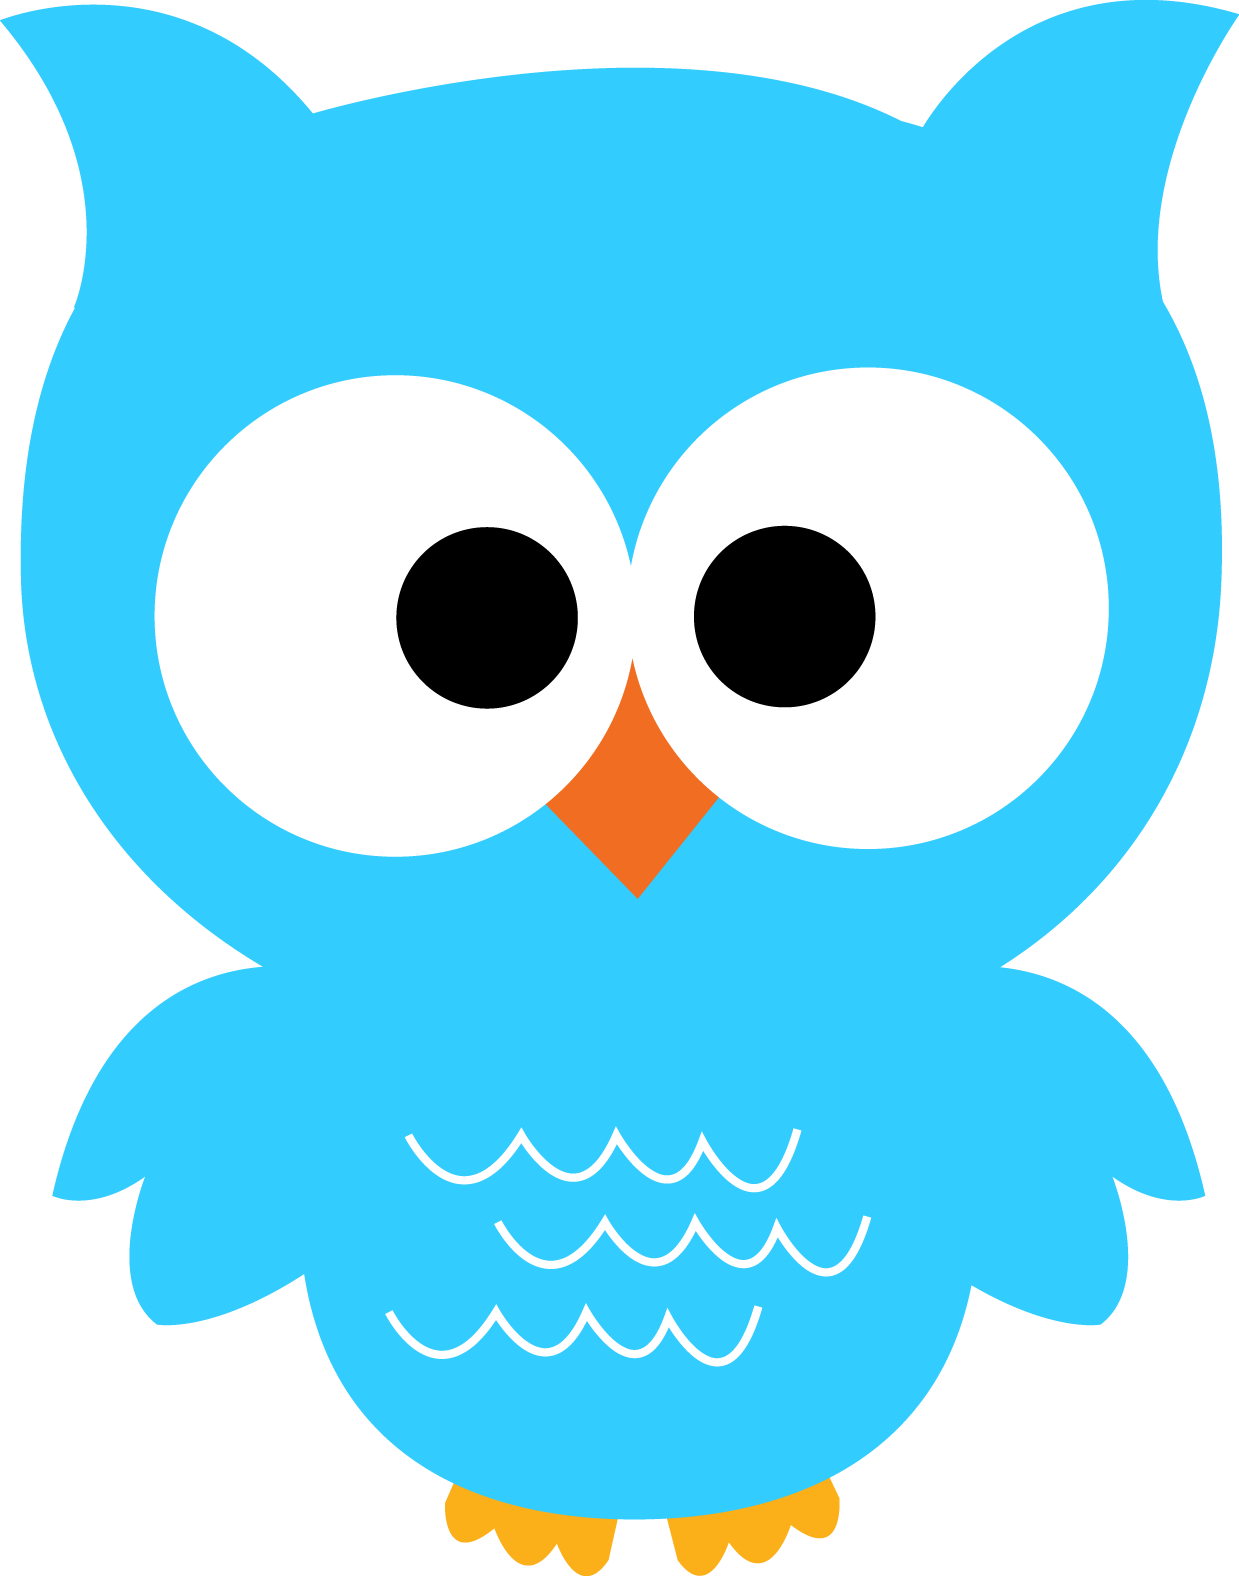 owl clipart blue